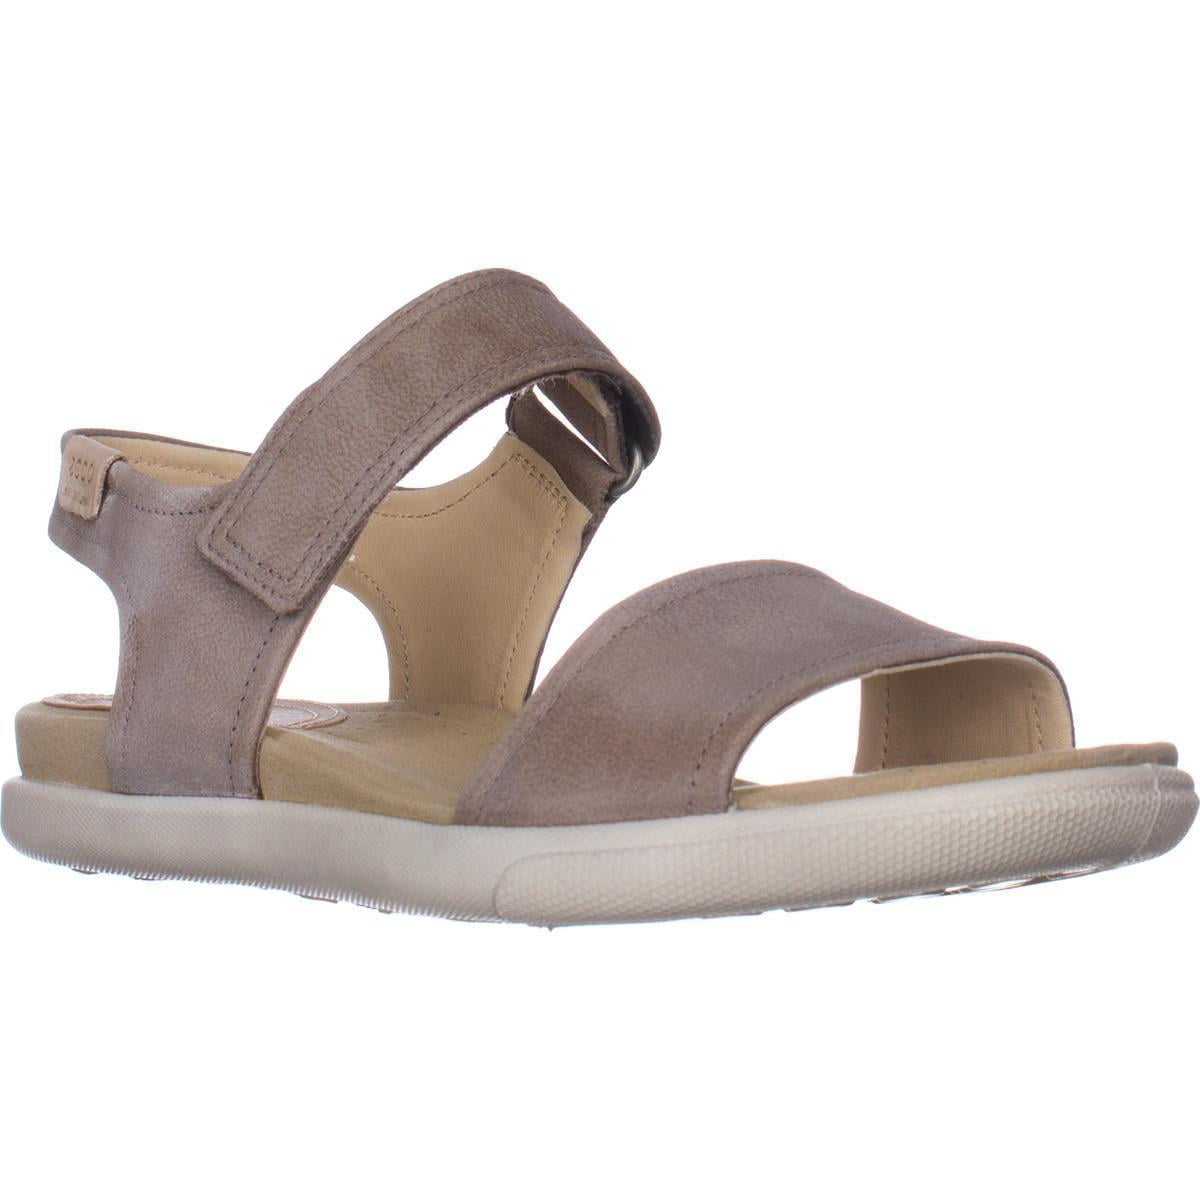 Stræde alkove Mægtig Womens ECCO Damara Flat Comfort Sandals, Birch - Walmart.com